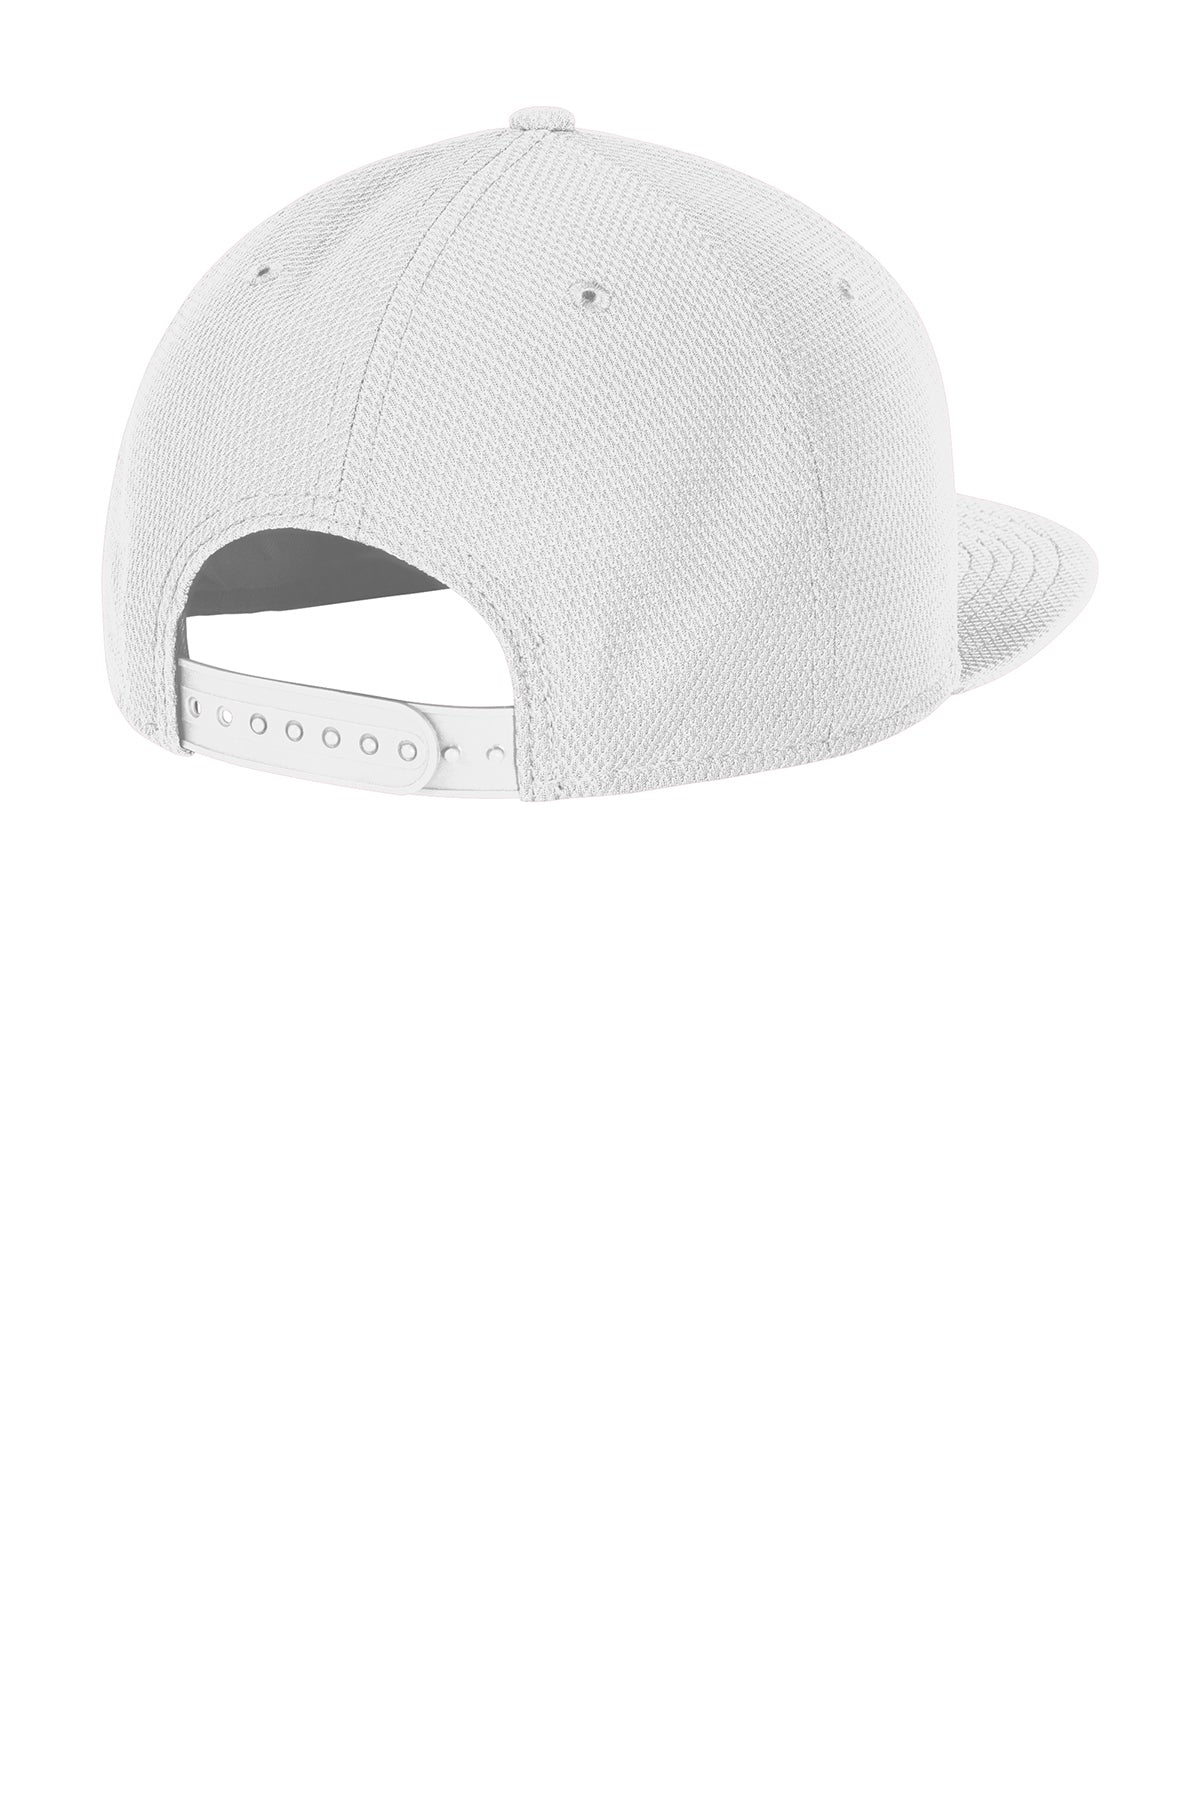 New Era Original Fit Diamond Era Snapback Custom Caps, White